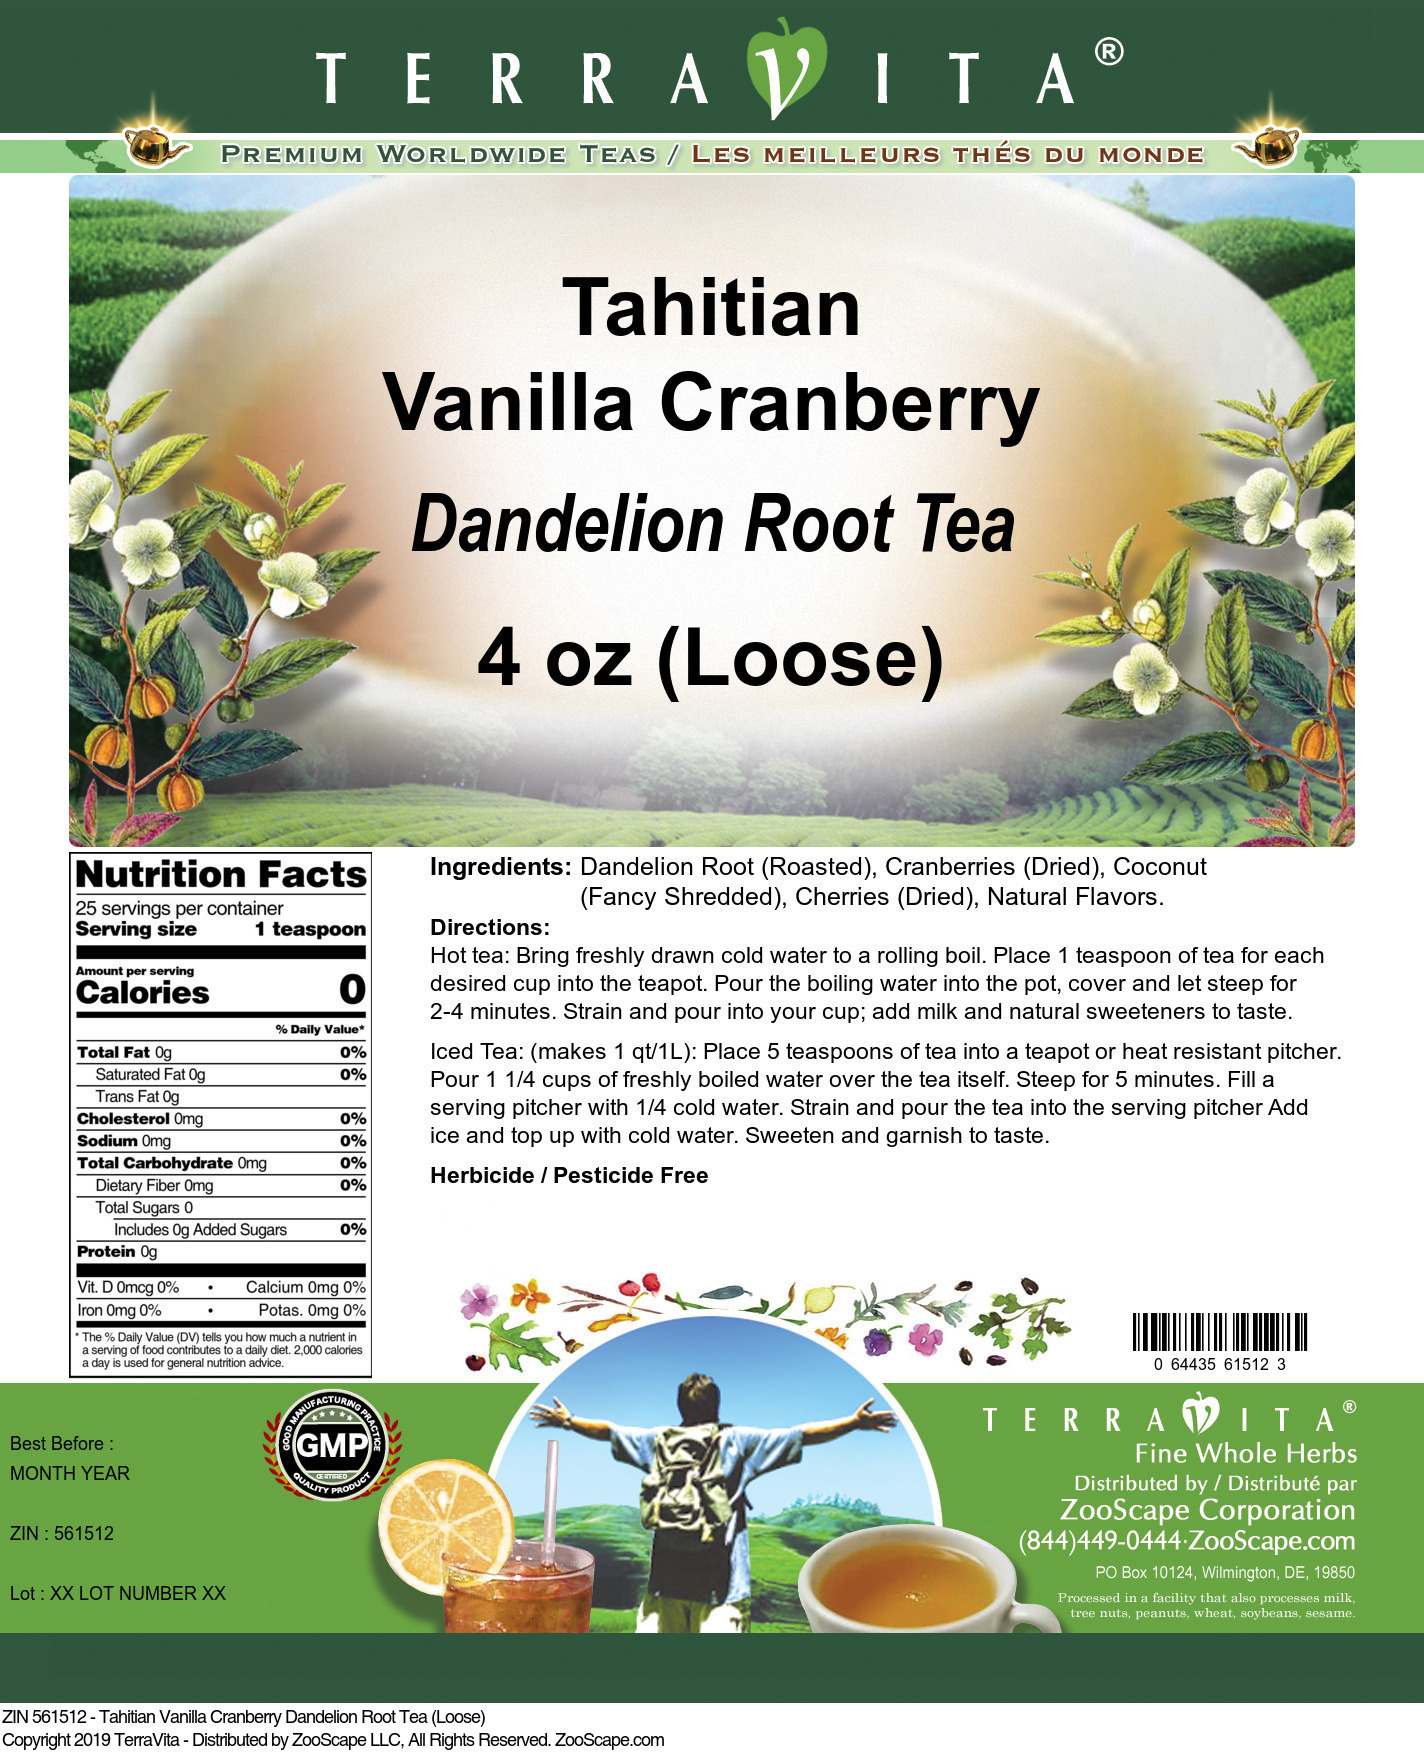 Tahitian Vanilla Cranberry Dandelion Root Tea (Loose) - Label